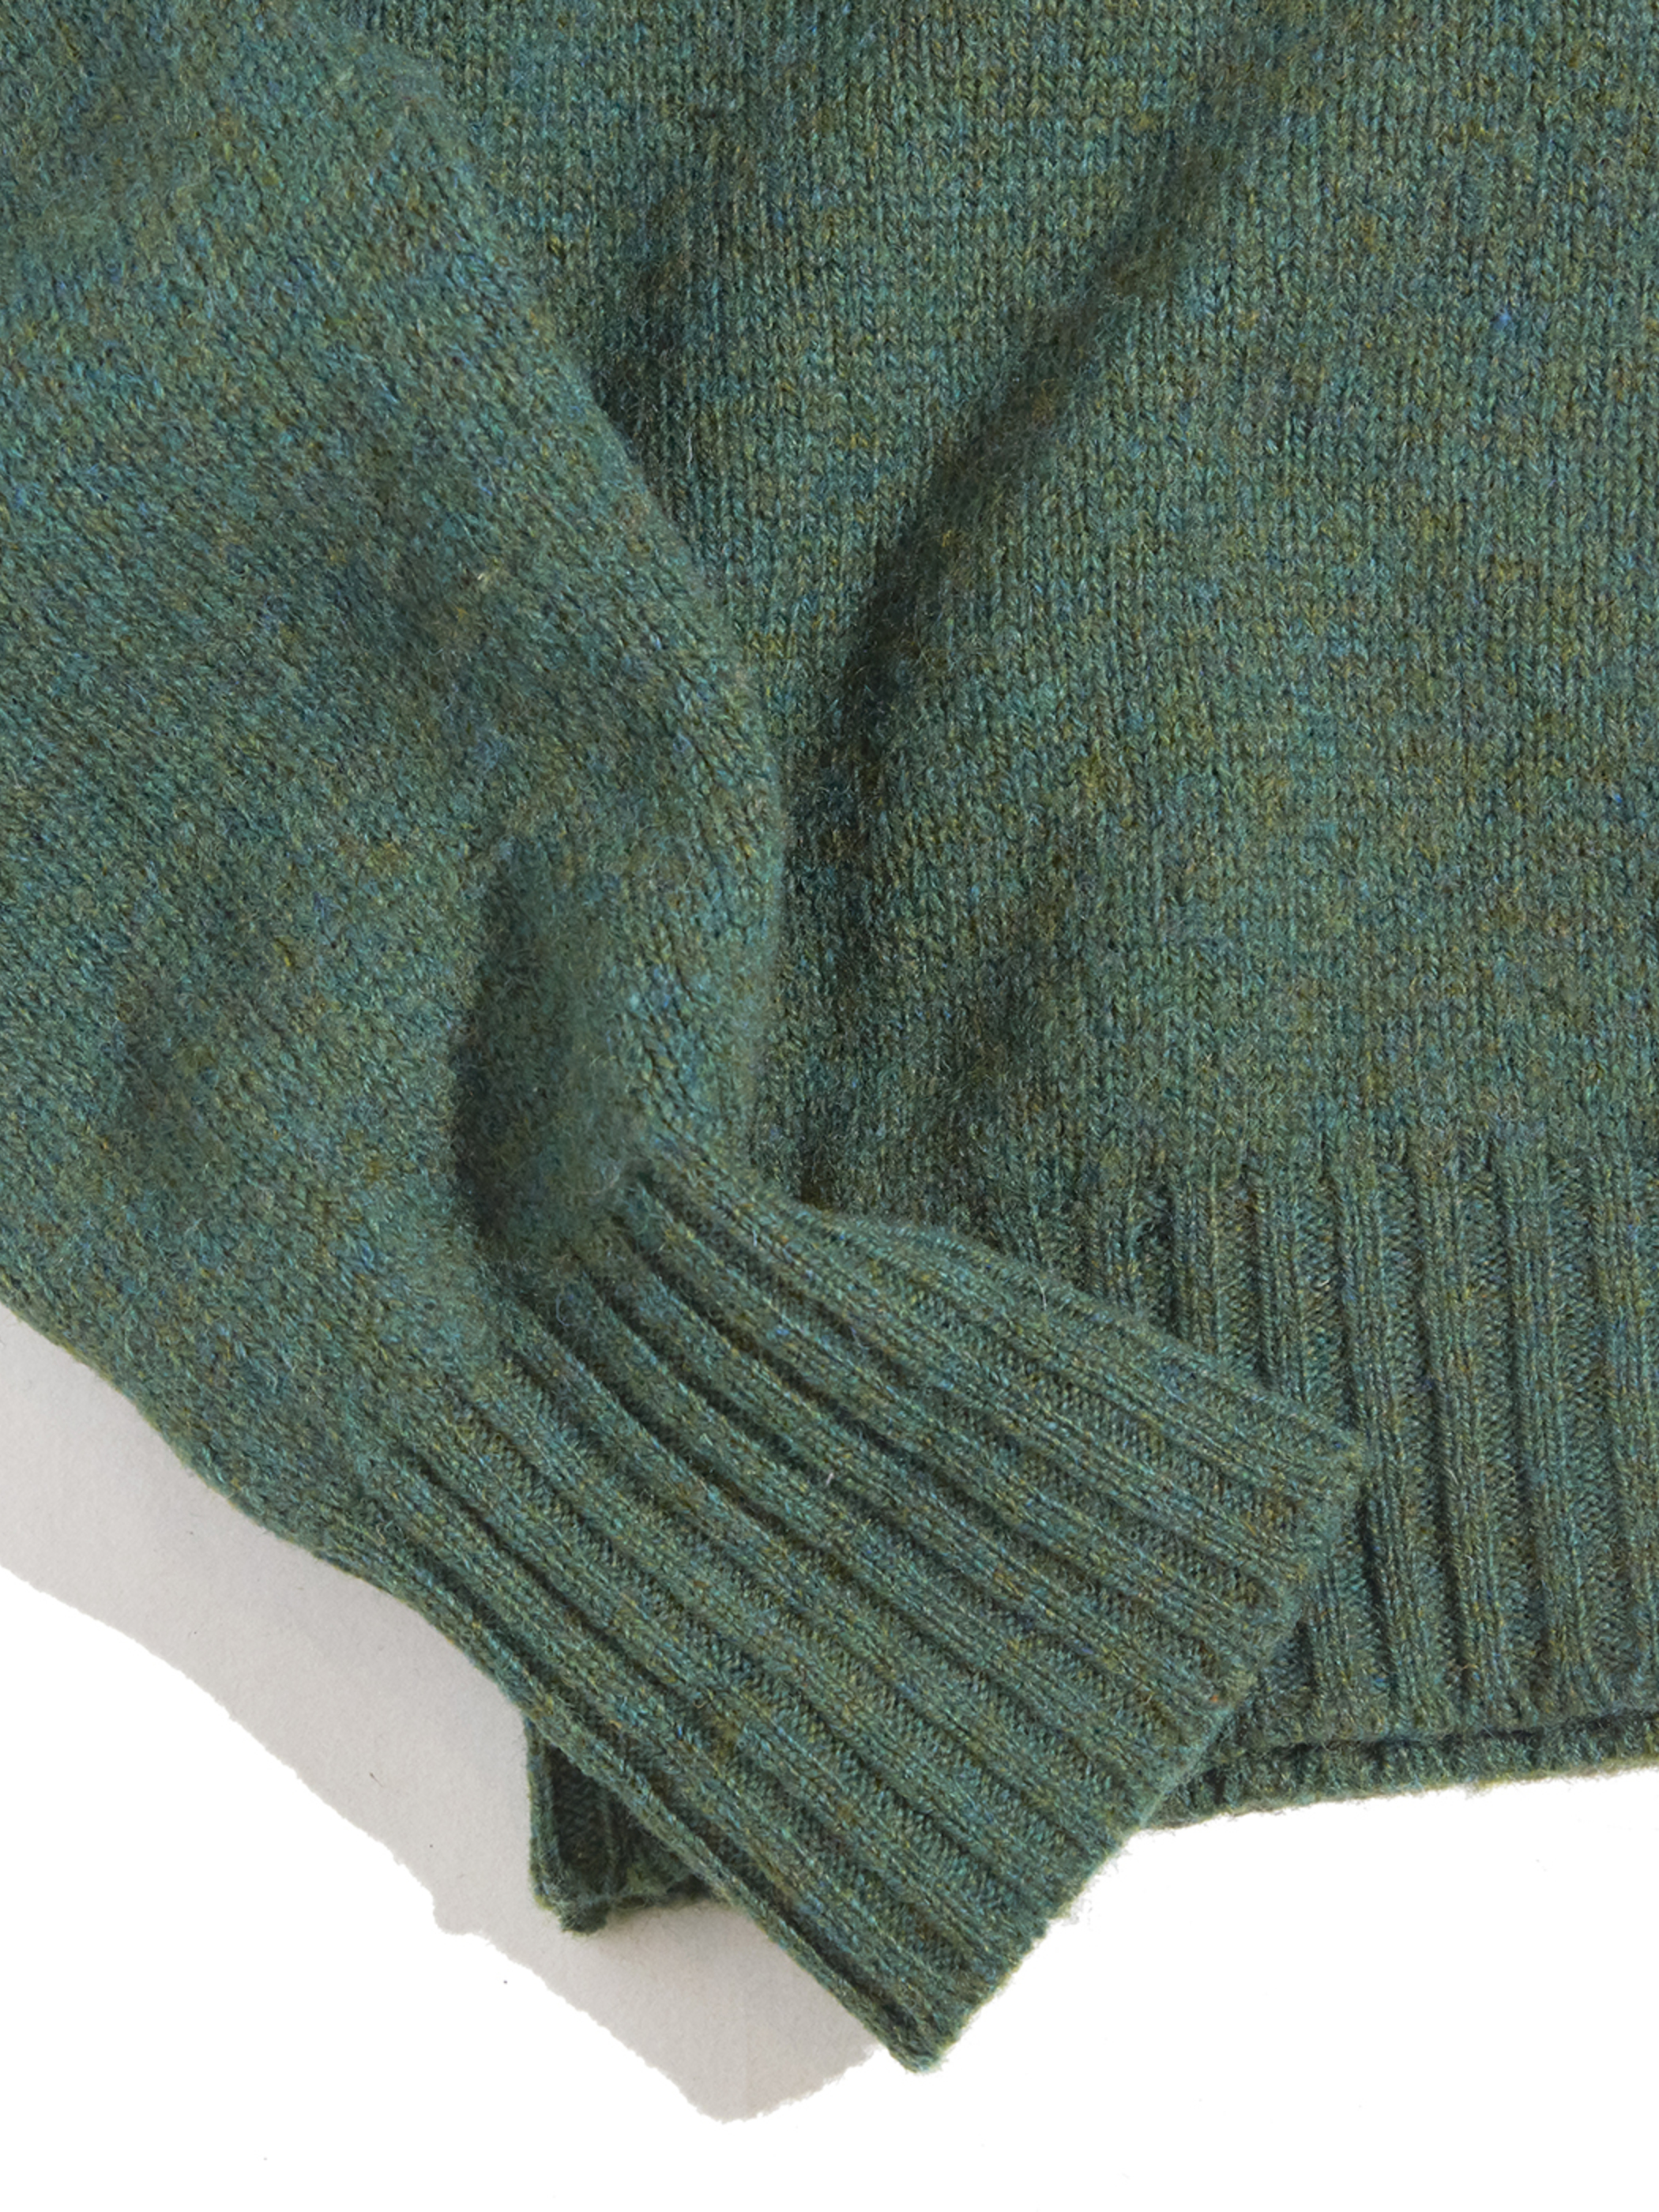 1970s "Alan Paine" shetland wool knit -MOSS-